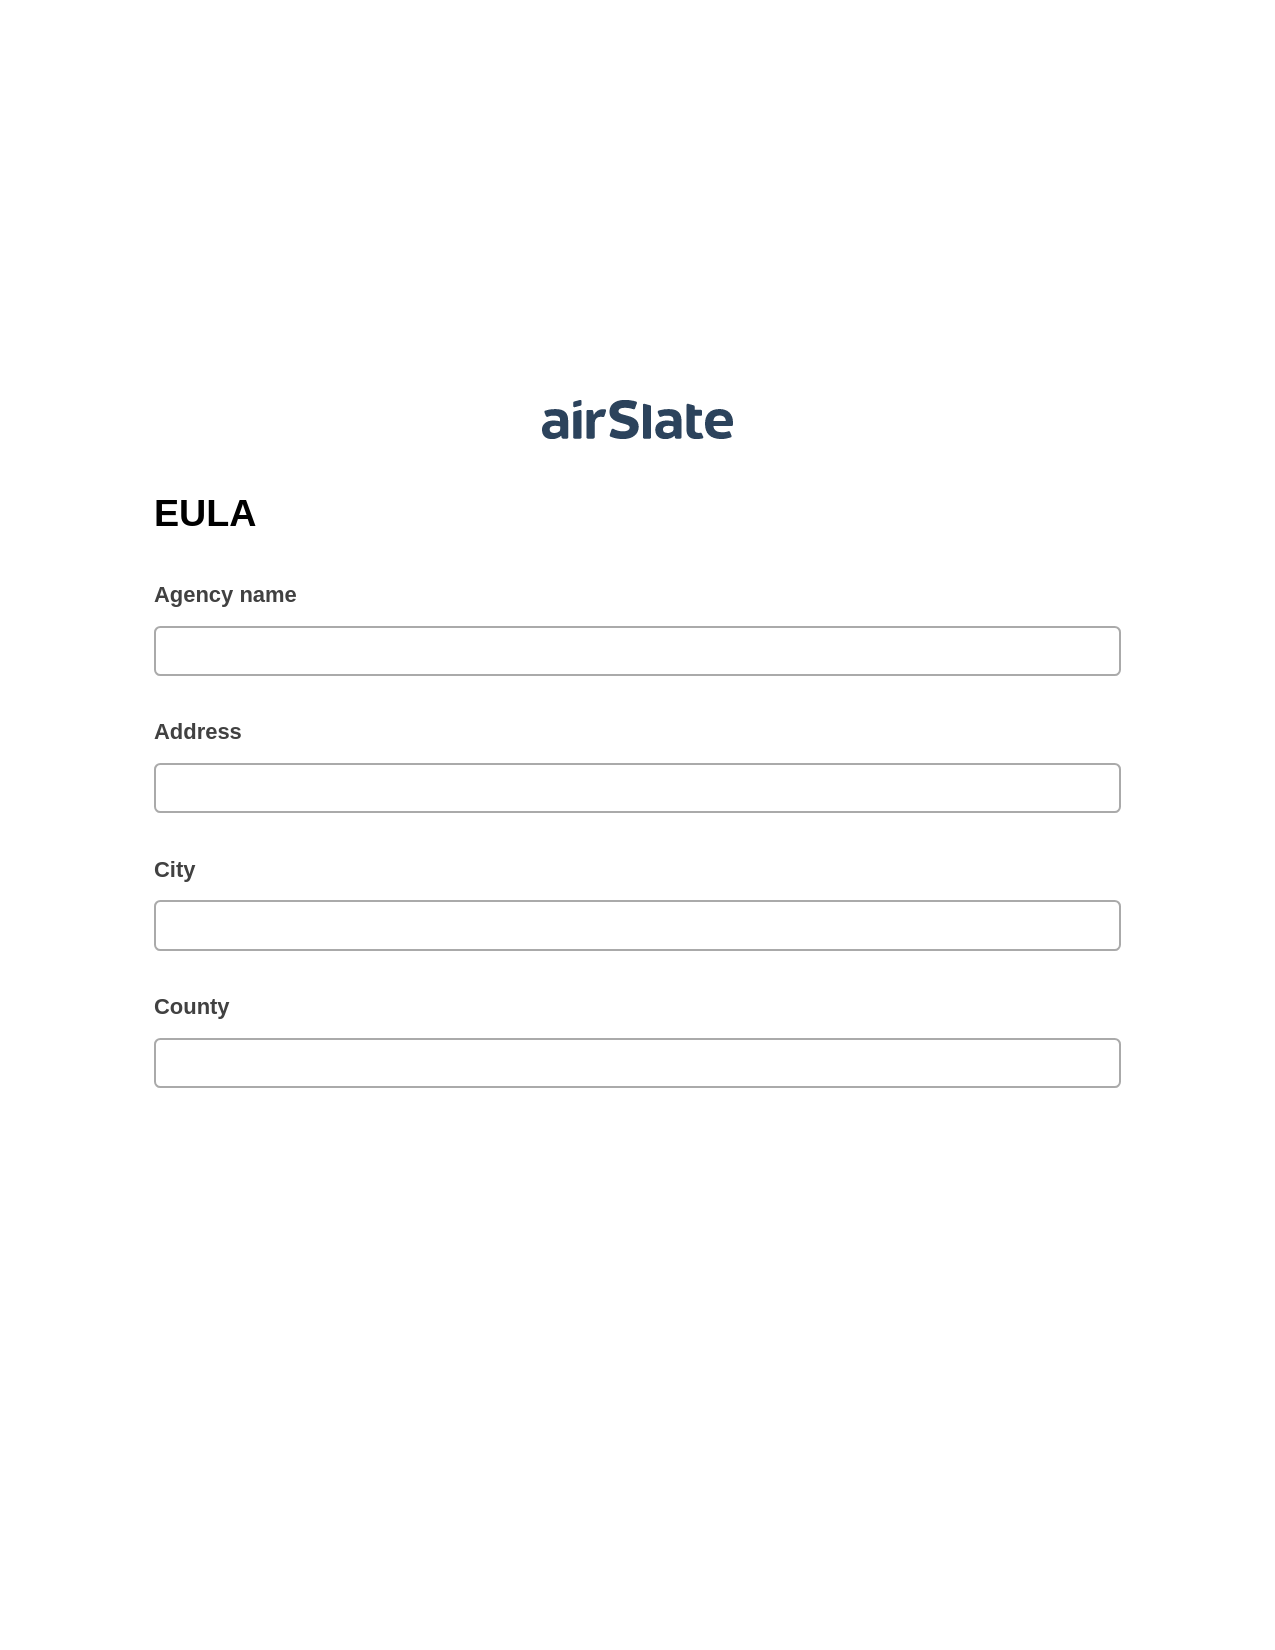 EULA Pre-fill from Google Sheets Bot, Webhook Bot, Export to Smartsheet